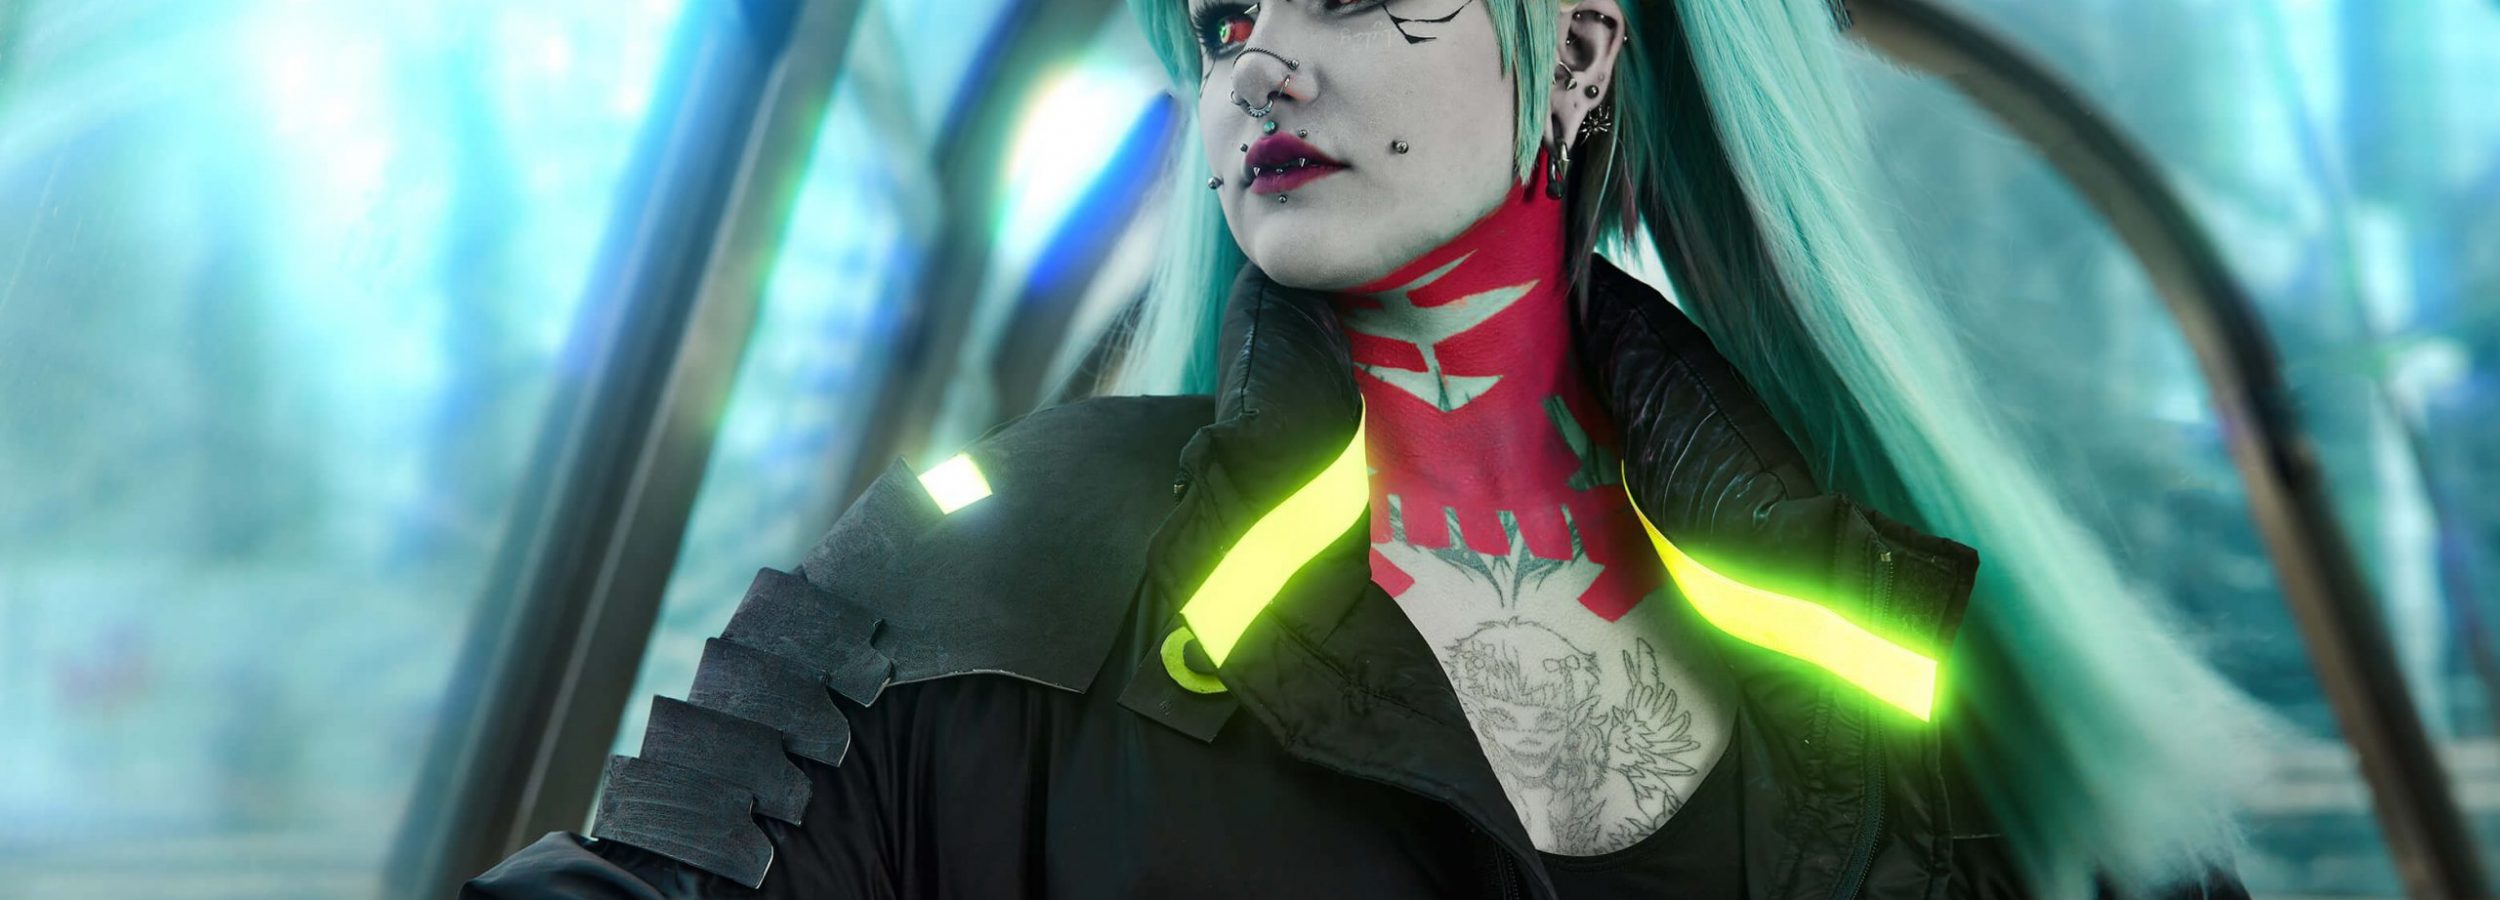 Rebecca cyberpunk cosplay adrien lopes